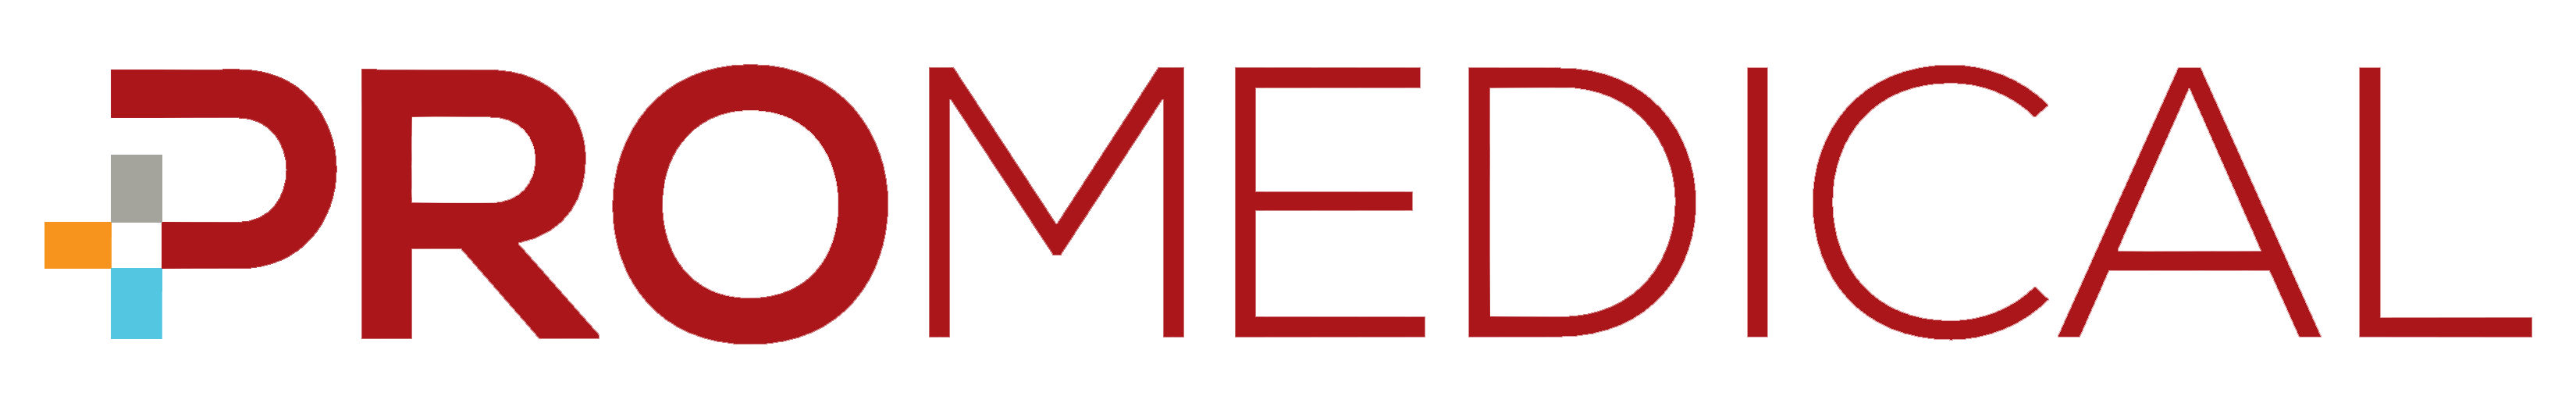 Promedical Logo